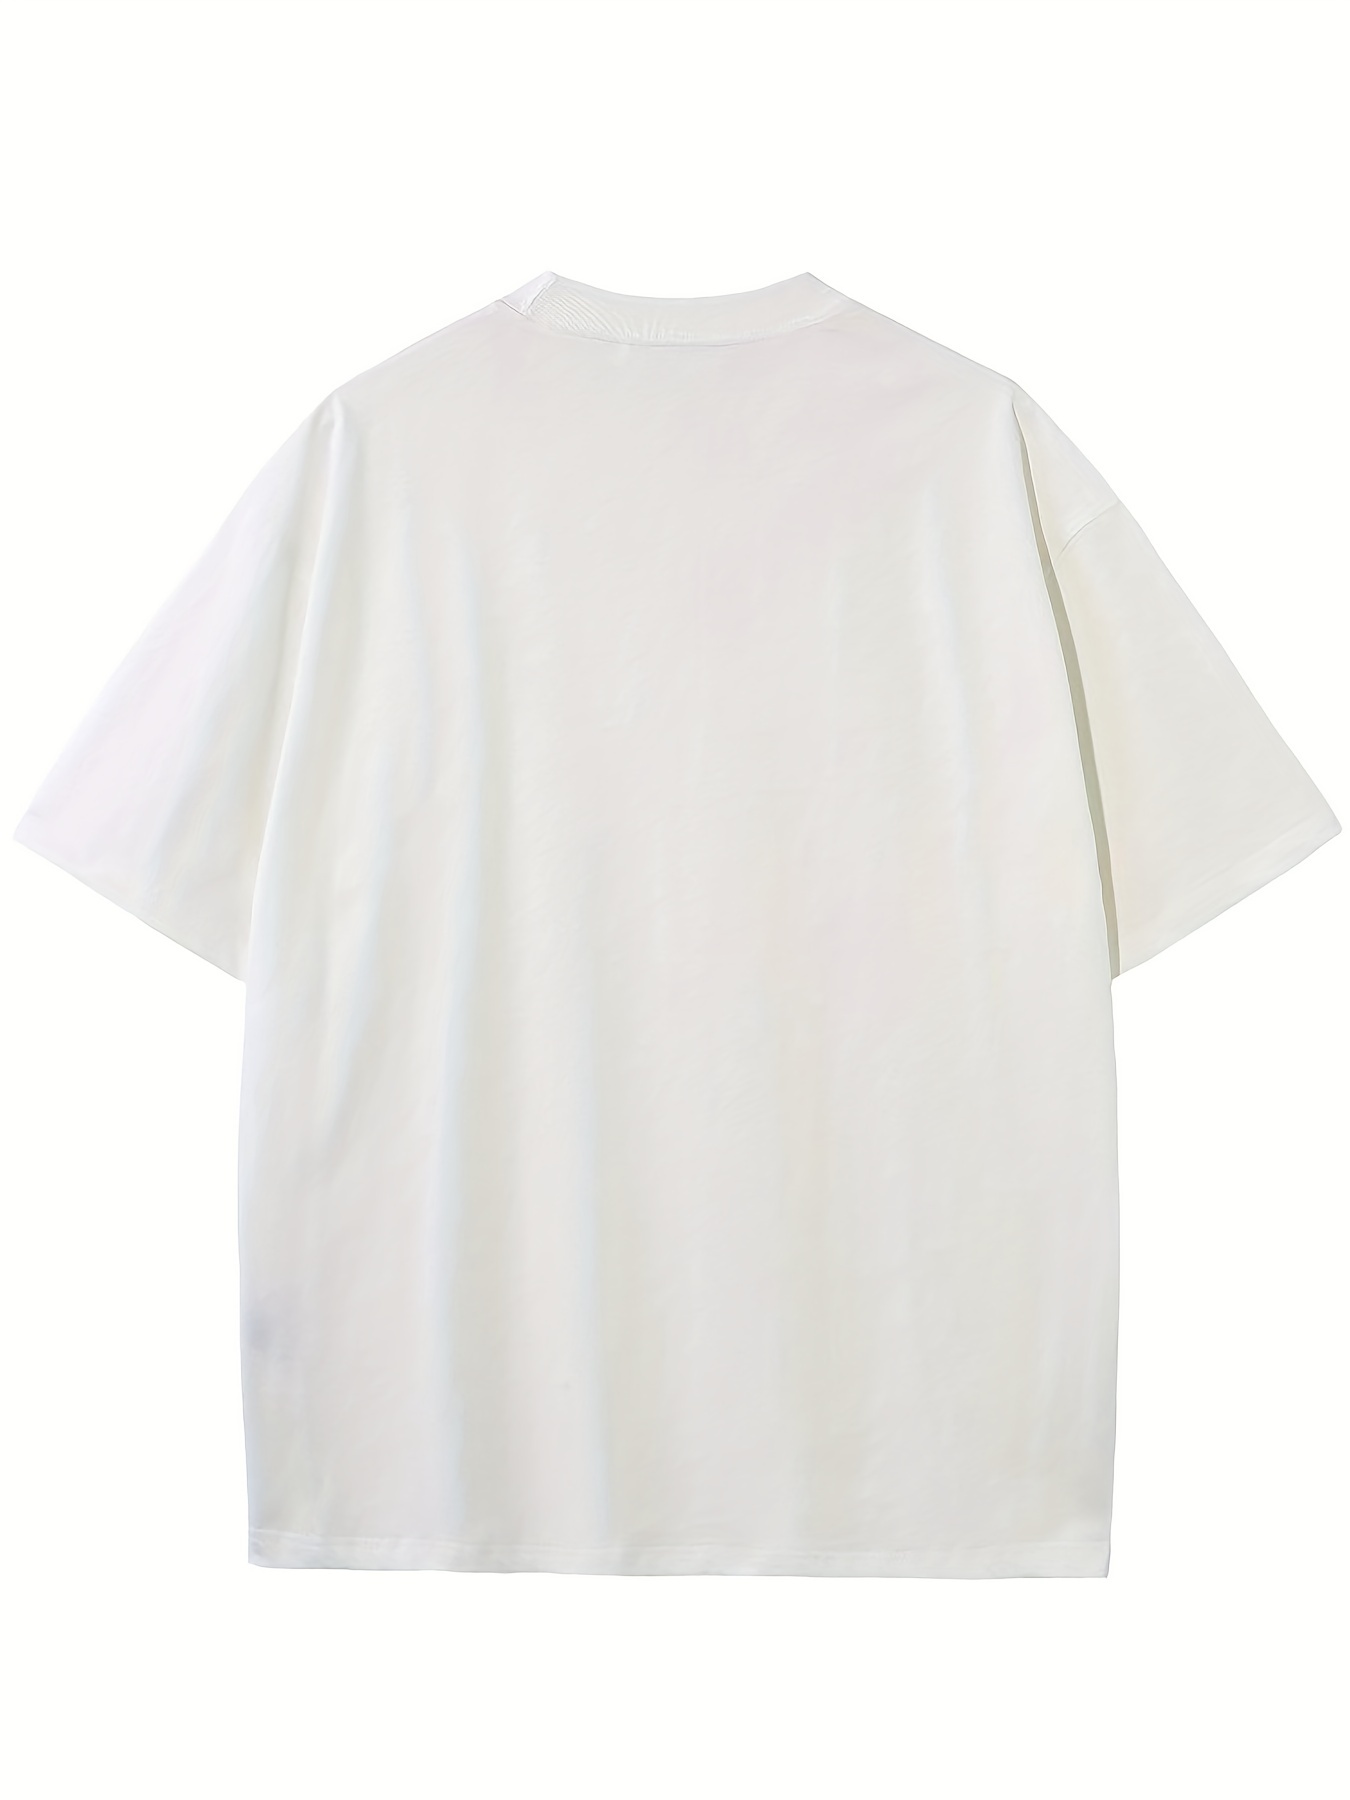 Four-Square T Shirts Men's Cotton Vintage T-Shirt Round Collar Castle  Crashers Tees Short Sleeve Clothes Summer - AliExpress